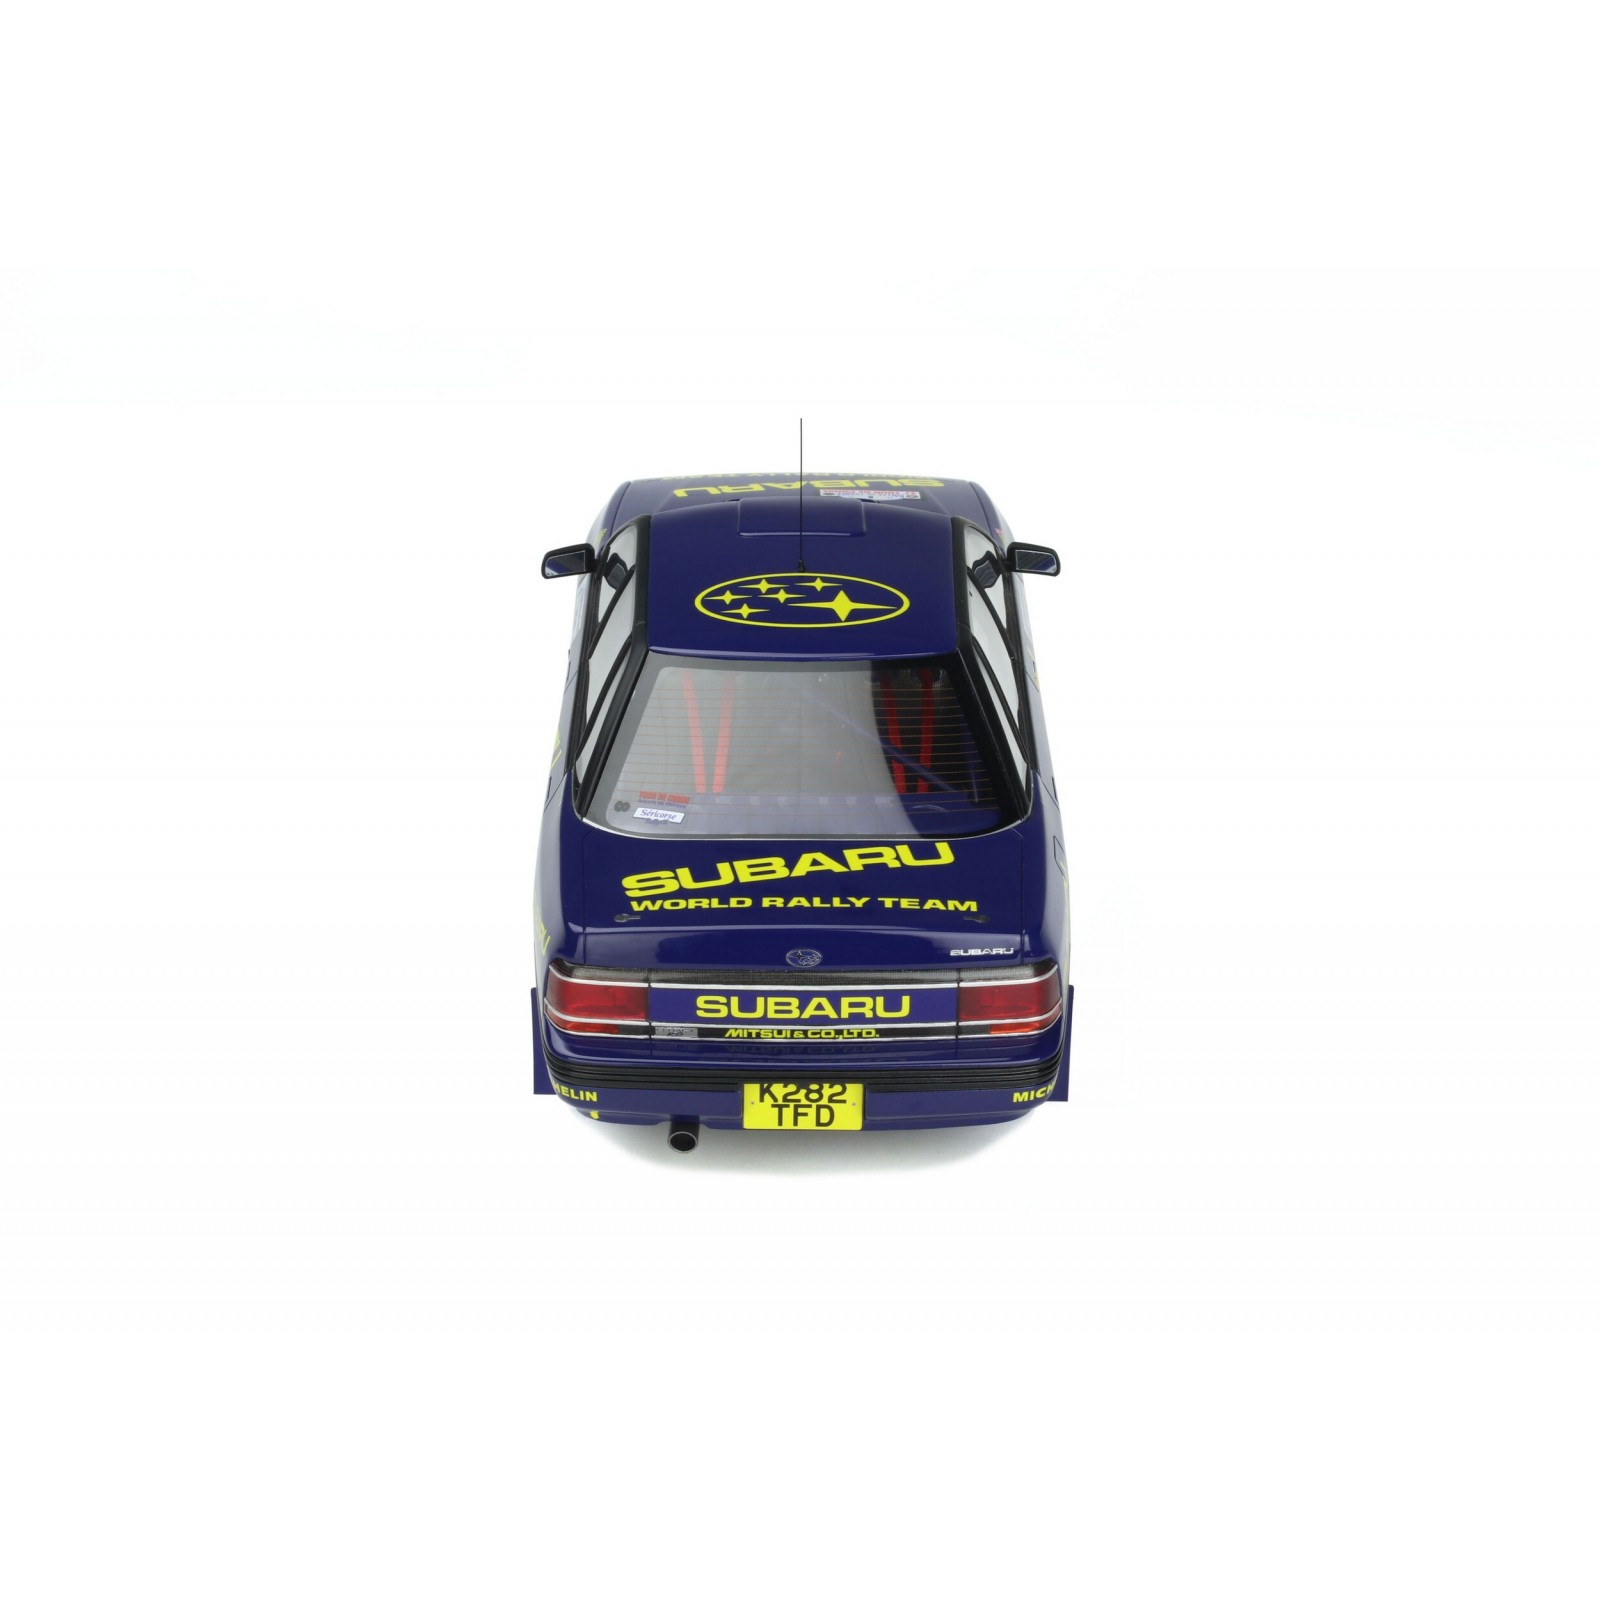  OttOmobile OTTO Mobile 1/18 - Subaru Legacy RS GR A - 1993 -  OT955 : Toys & Games